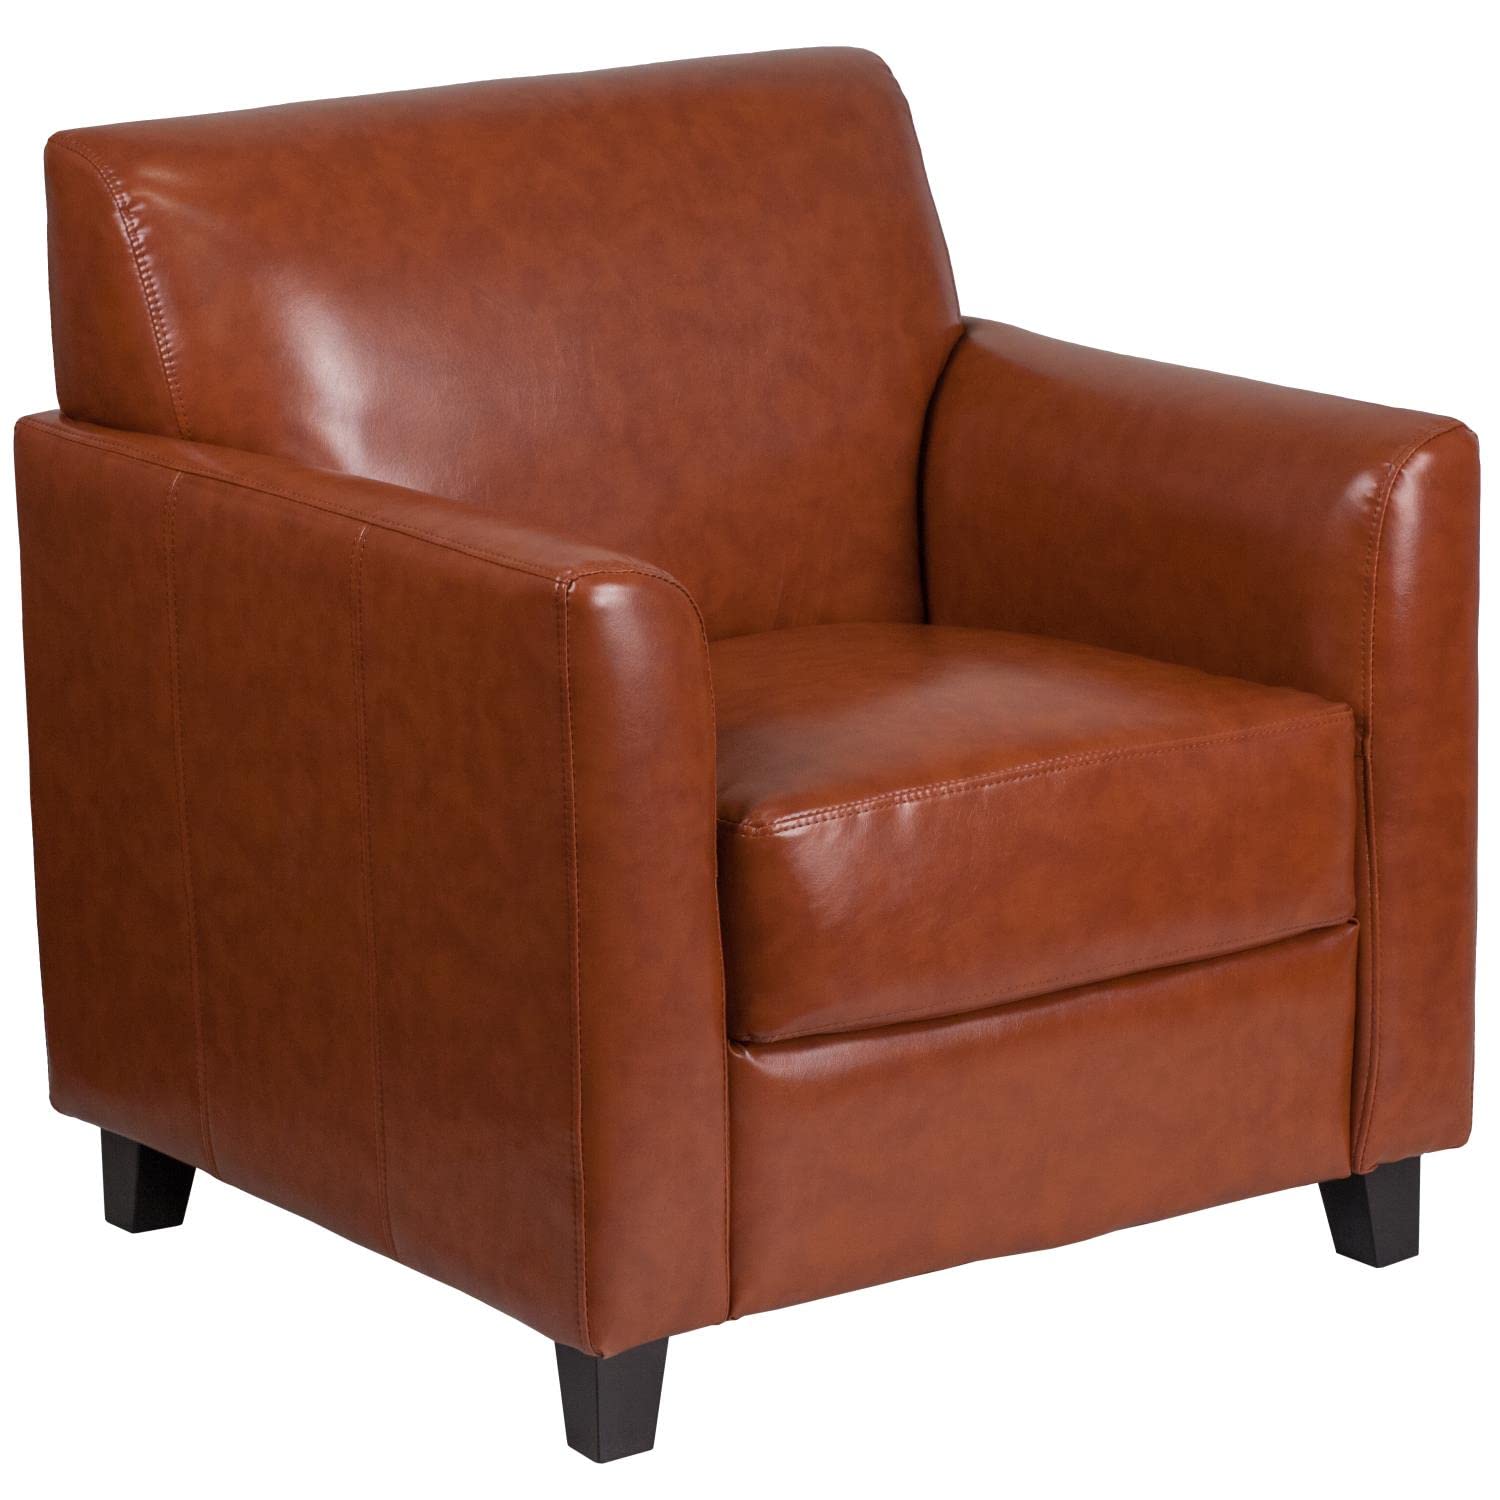 Flash Furniture Miękkie krzesło skórzane w kolorze koniaku HERCULES Diplomat